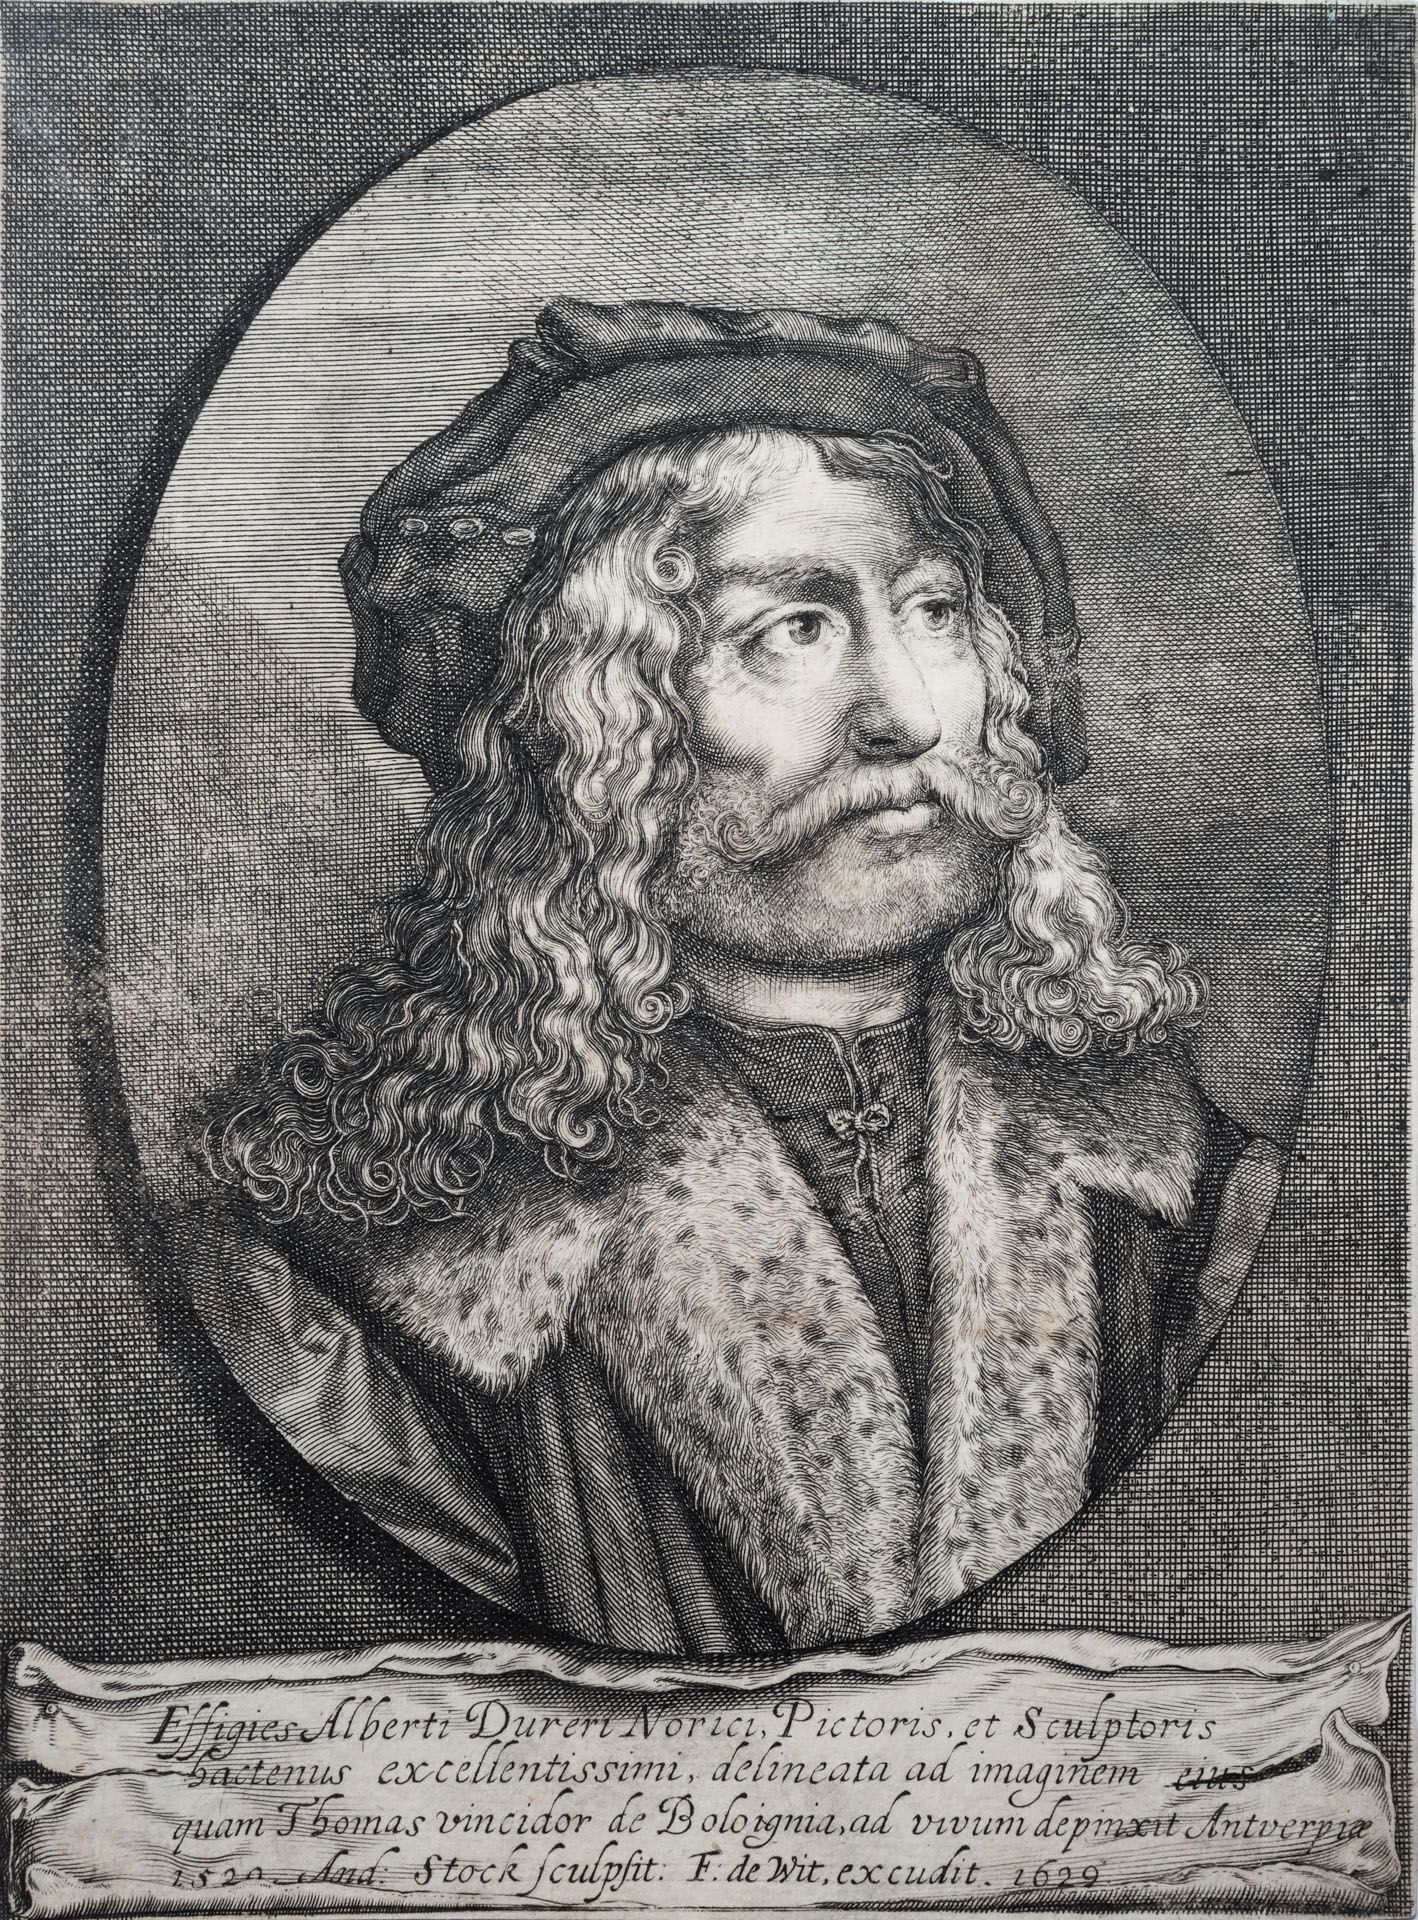 Andries Stock (1580-1648), Albrecht Durer, 1471 - 1528. German Painter and Engraver